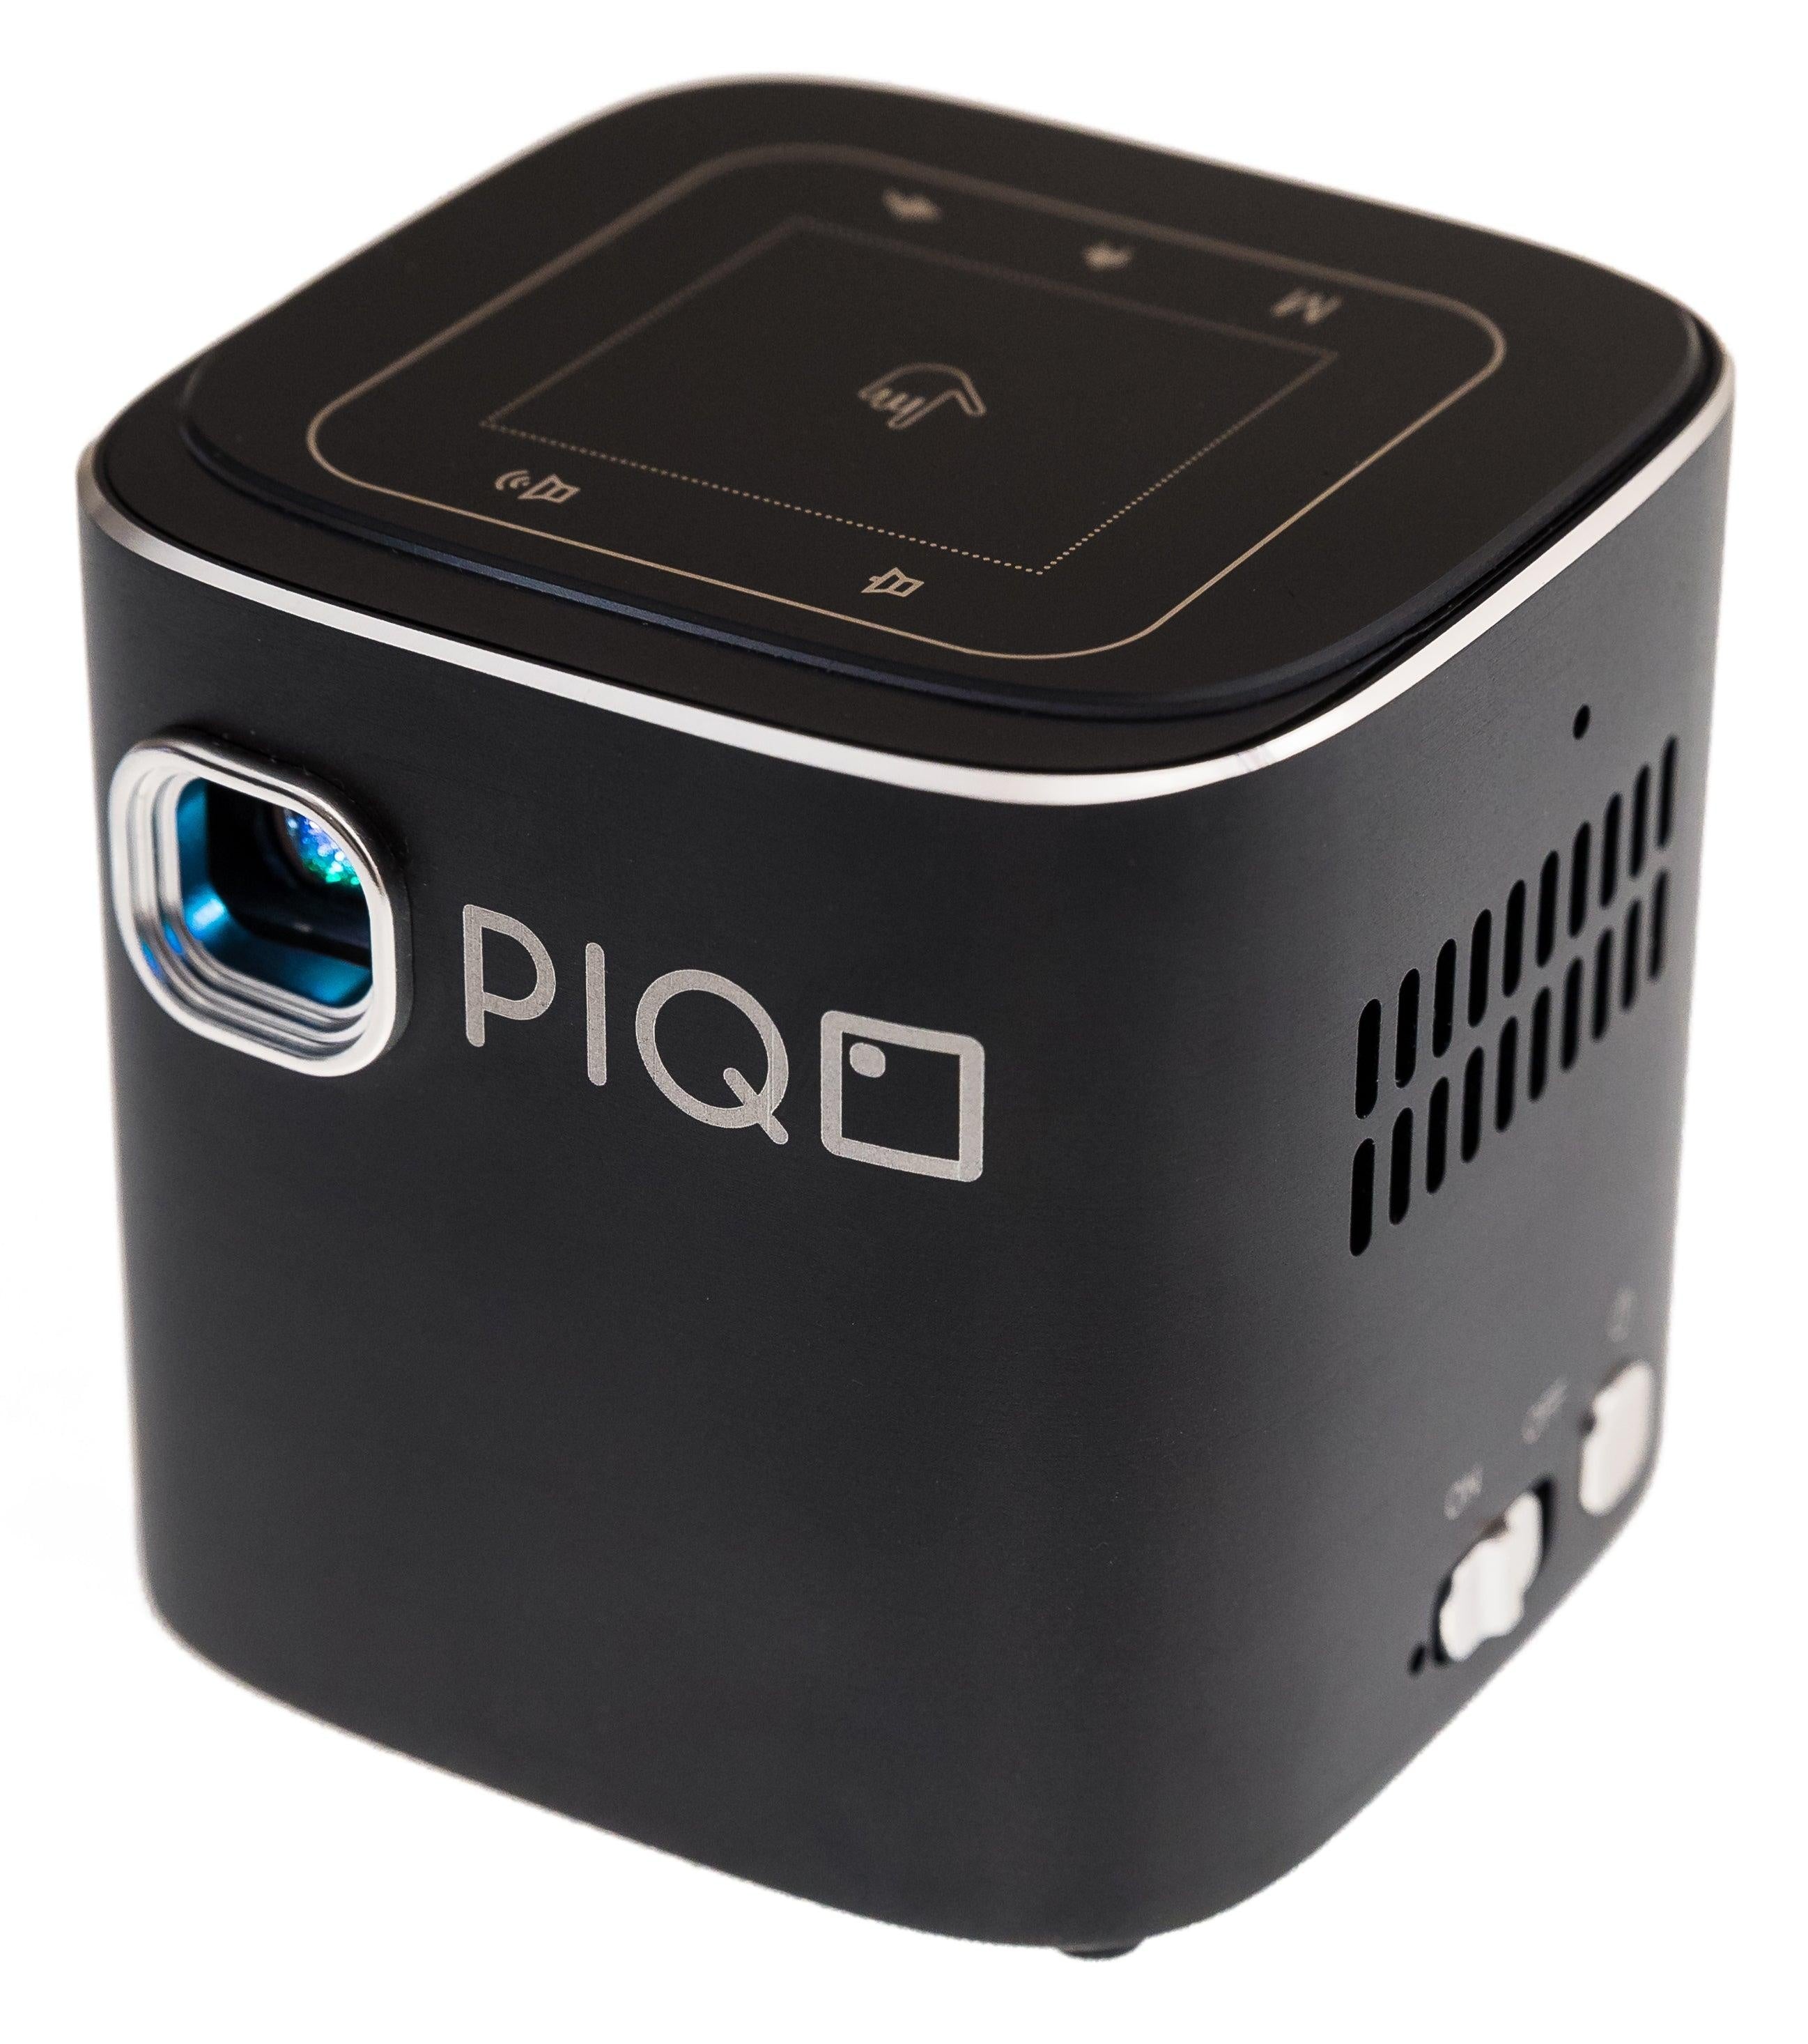 PIQO Projector - The world's smartest 1080p mini pocket projector PIQO